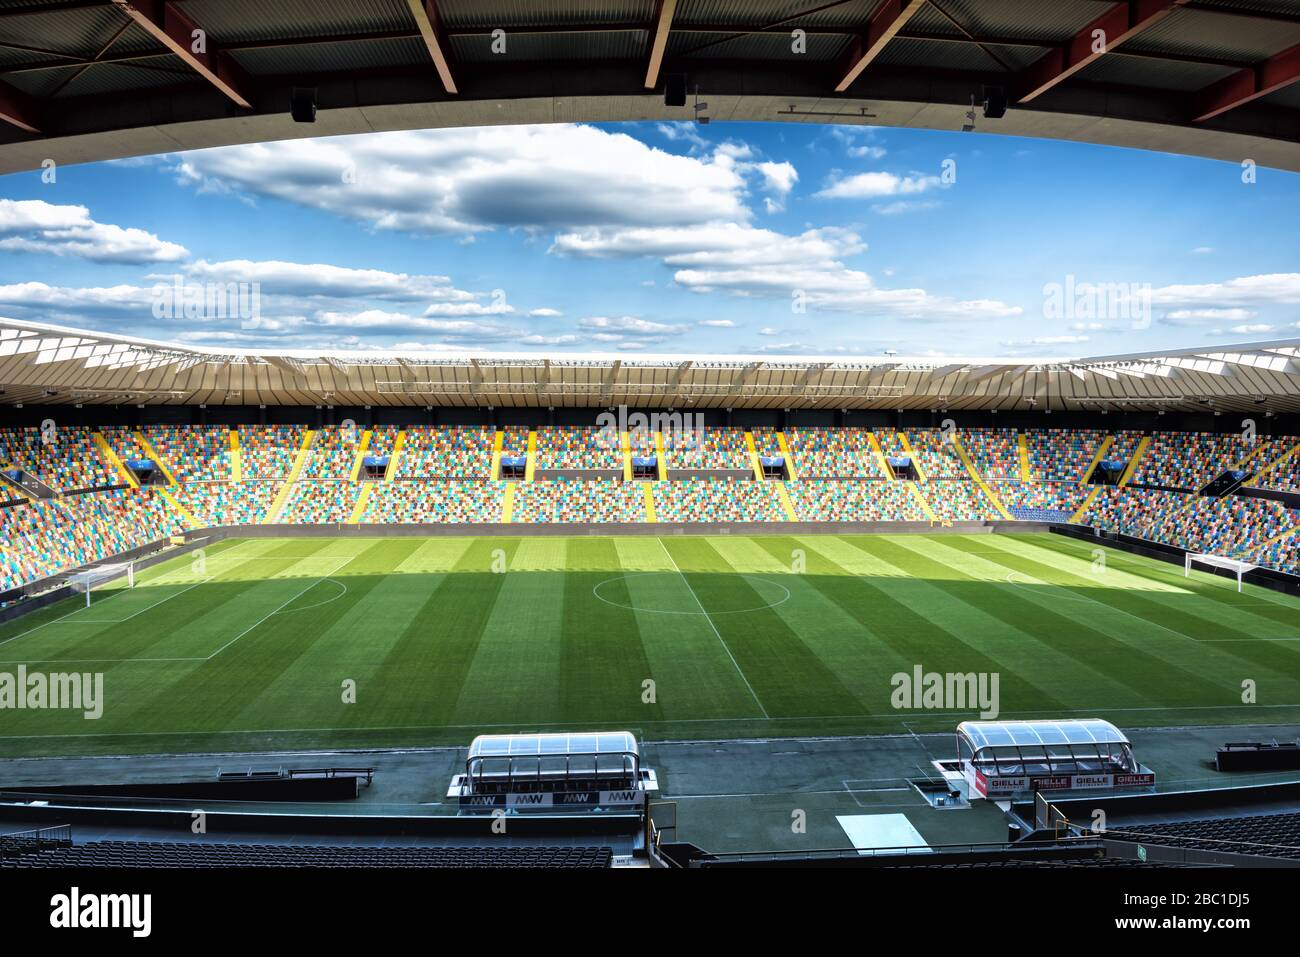 Empty stadium Soccer or football field, terraces and stand seats at  Dacia Arena - Stadio Friuli, the main Friuli Venezia Giulia region stadium. Stock Photo